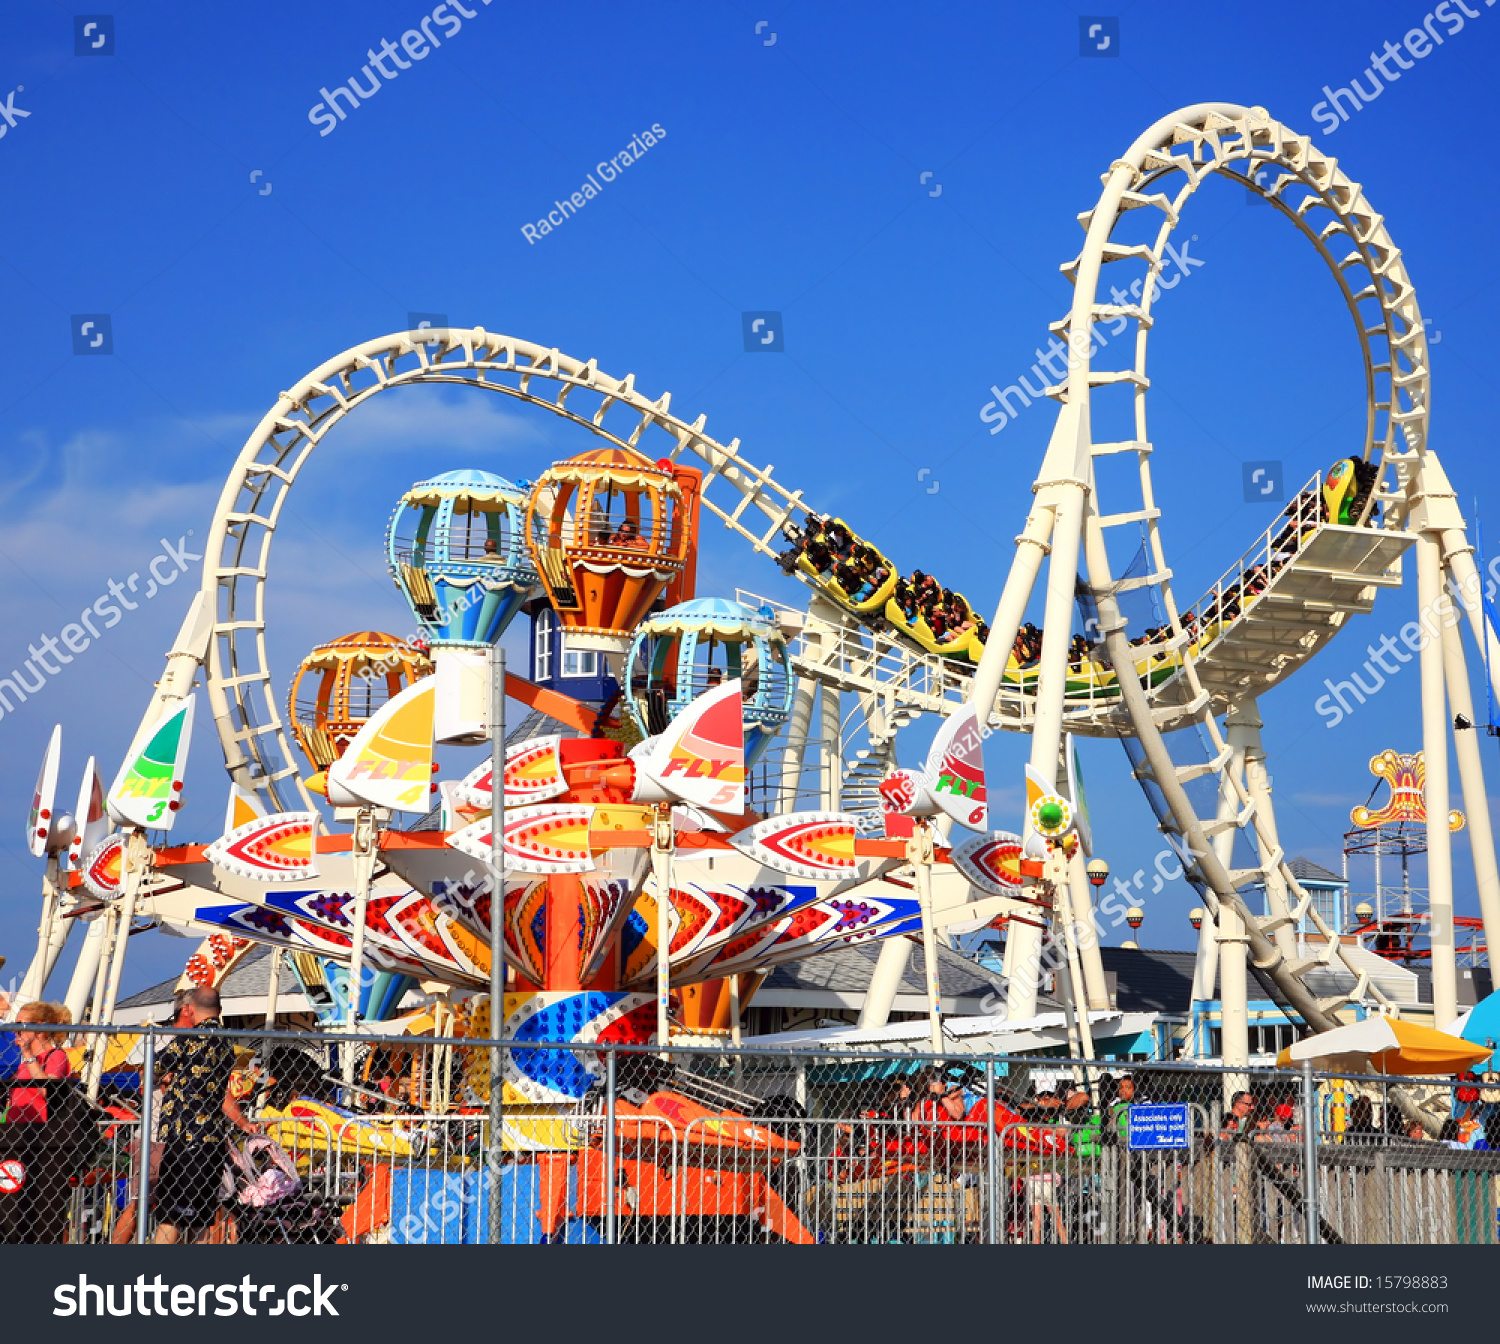 Amusement Park Rides Stock Photo 15798883 - Shutterstock